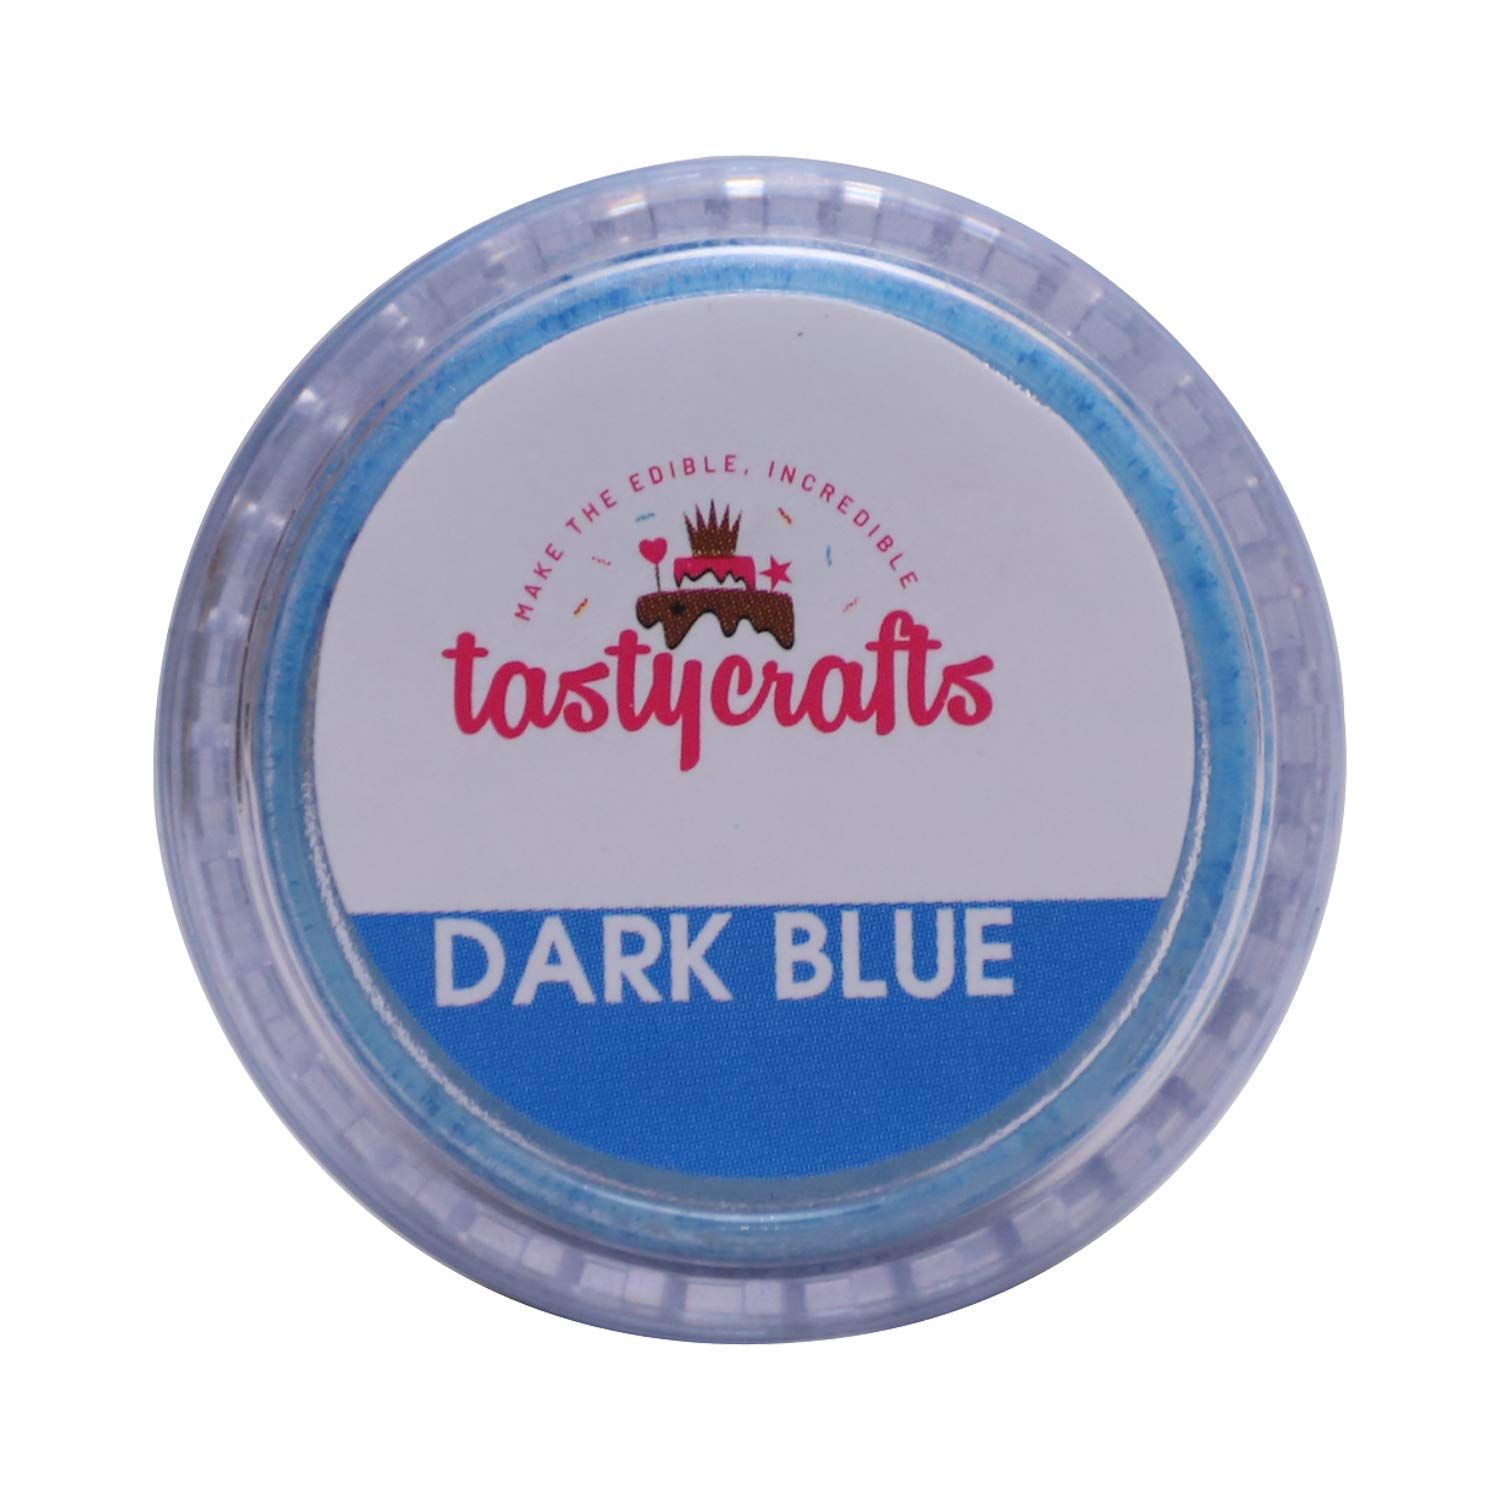 Tasty crafts Luster Dust Dark Blue Image